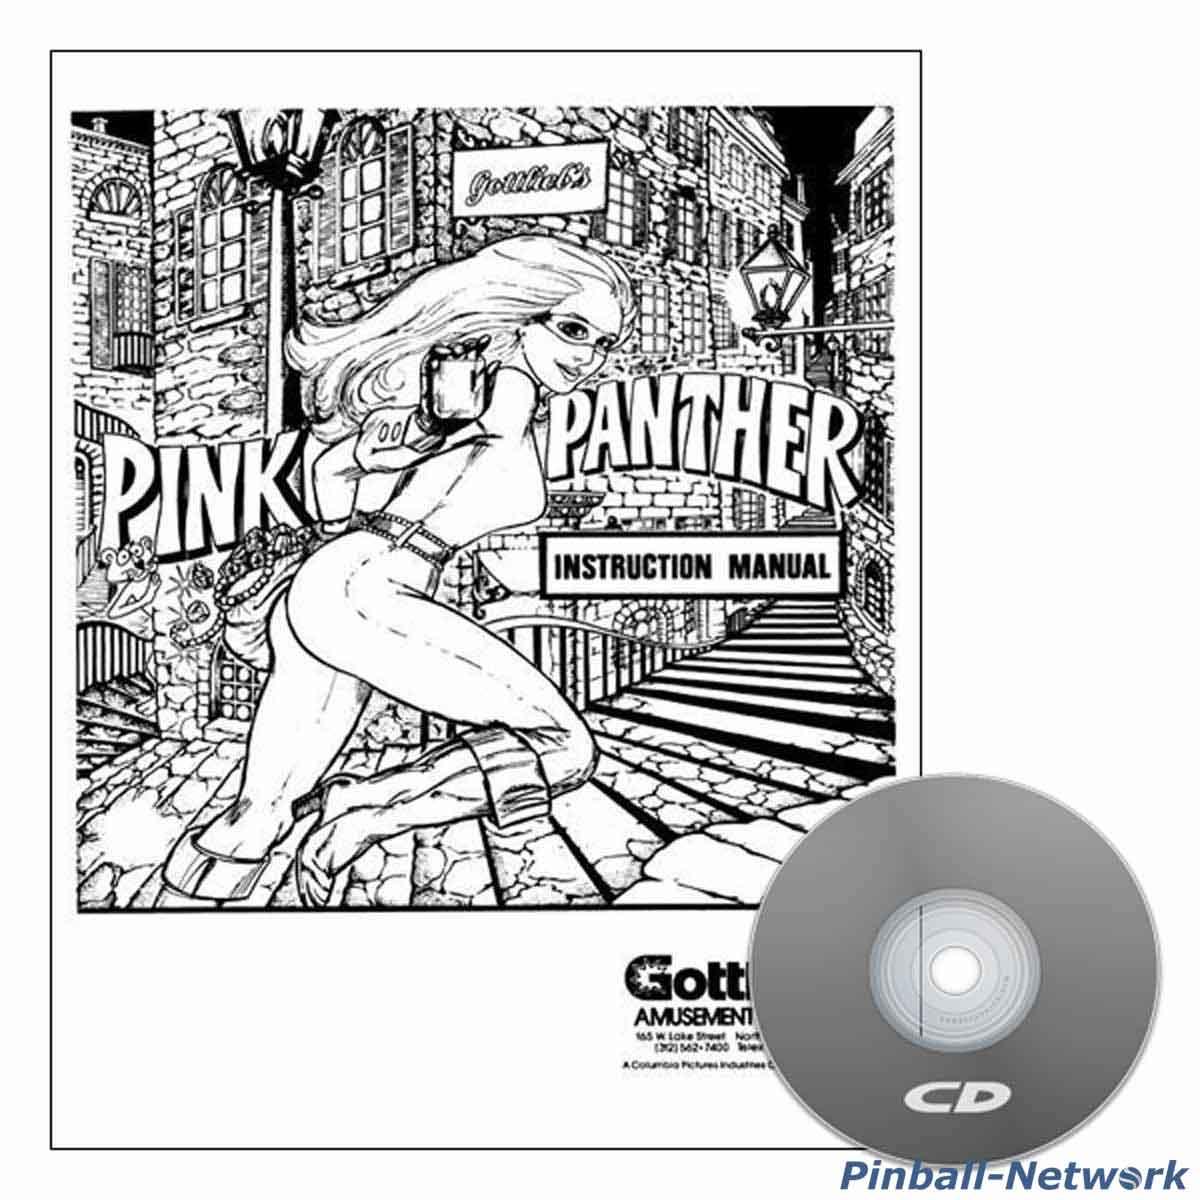 Pink Panther Instruction Manual